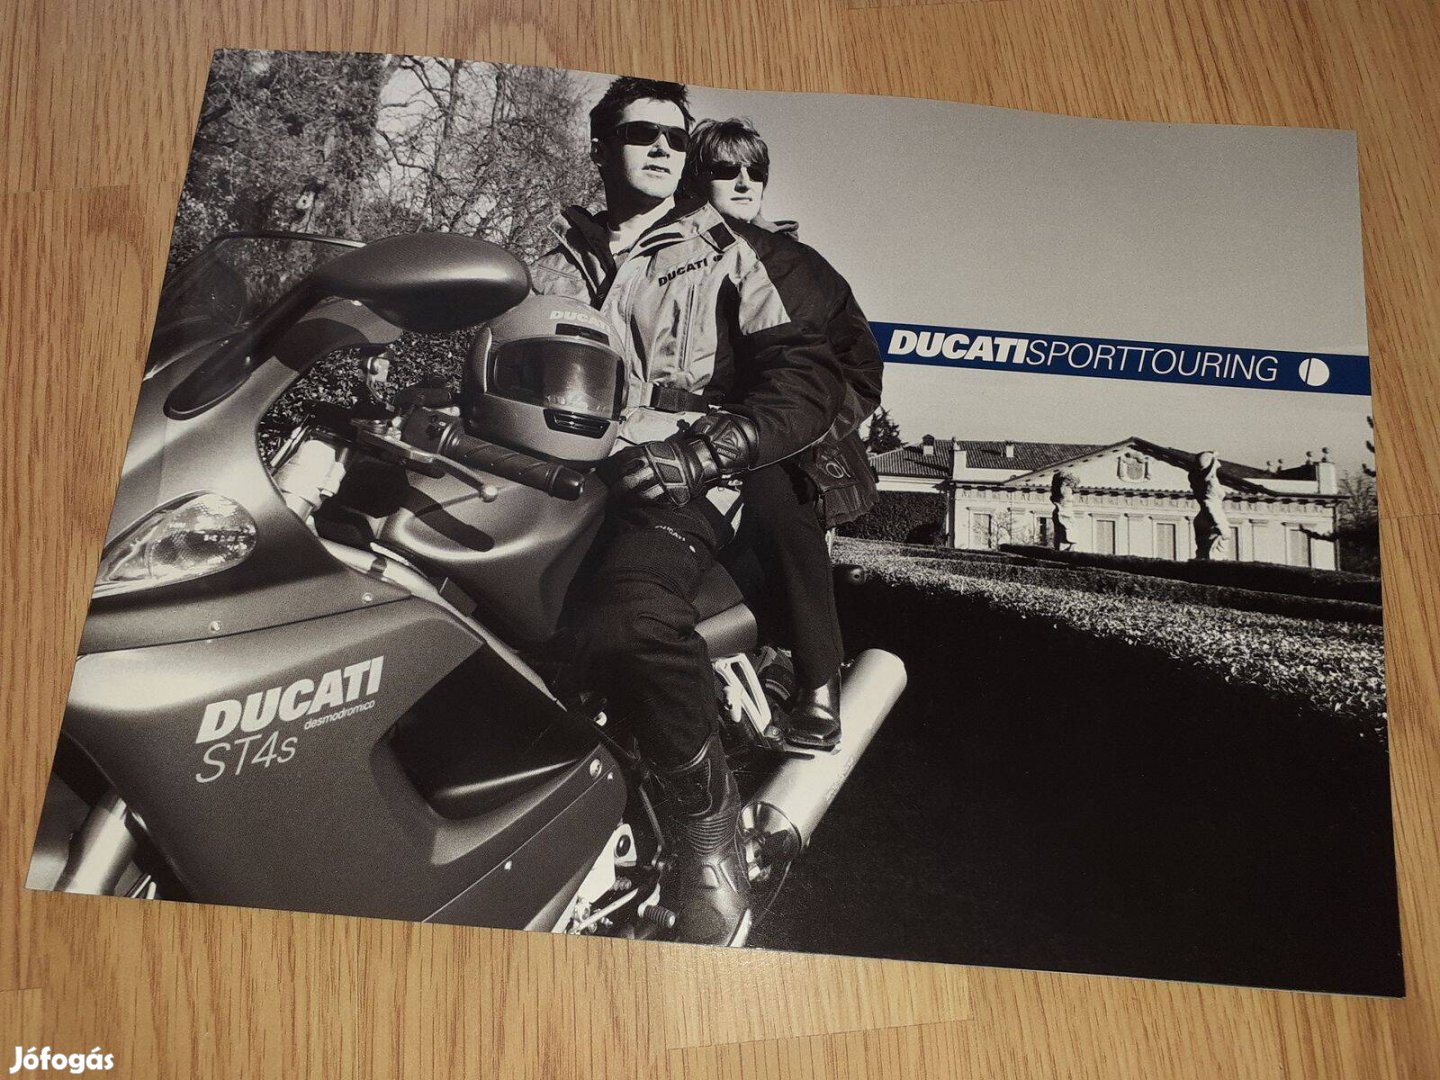 Ducati Sporttouring prospektus - olasz/angol nyelvű